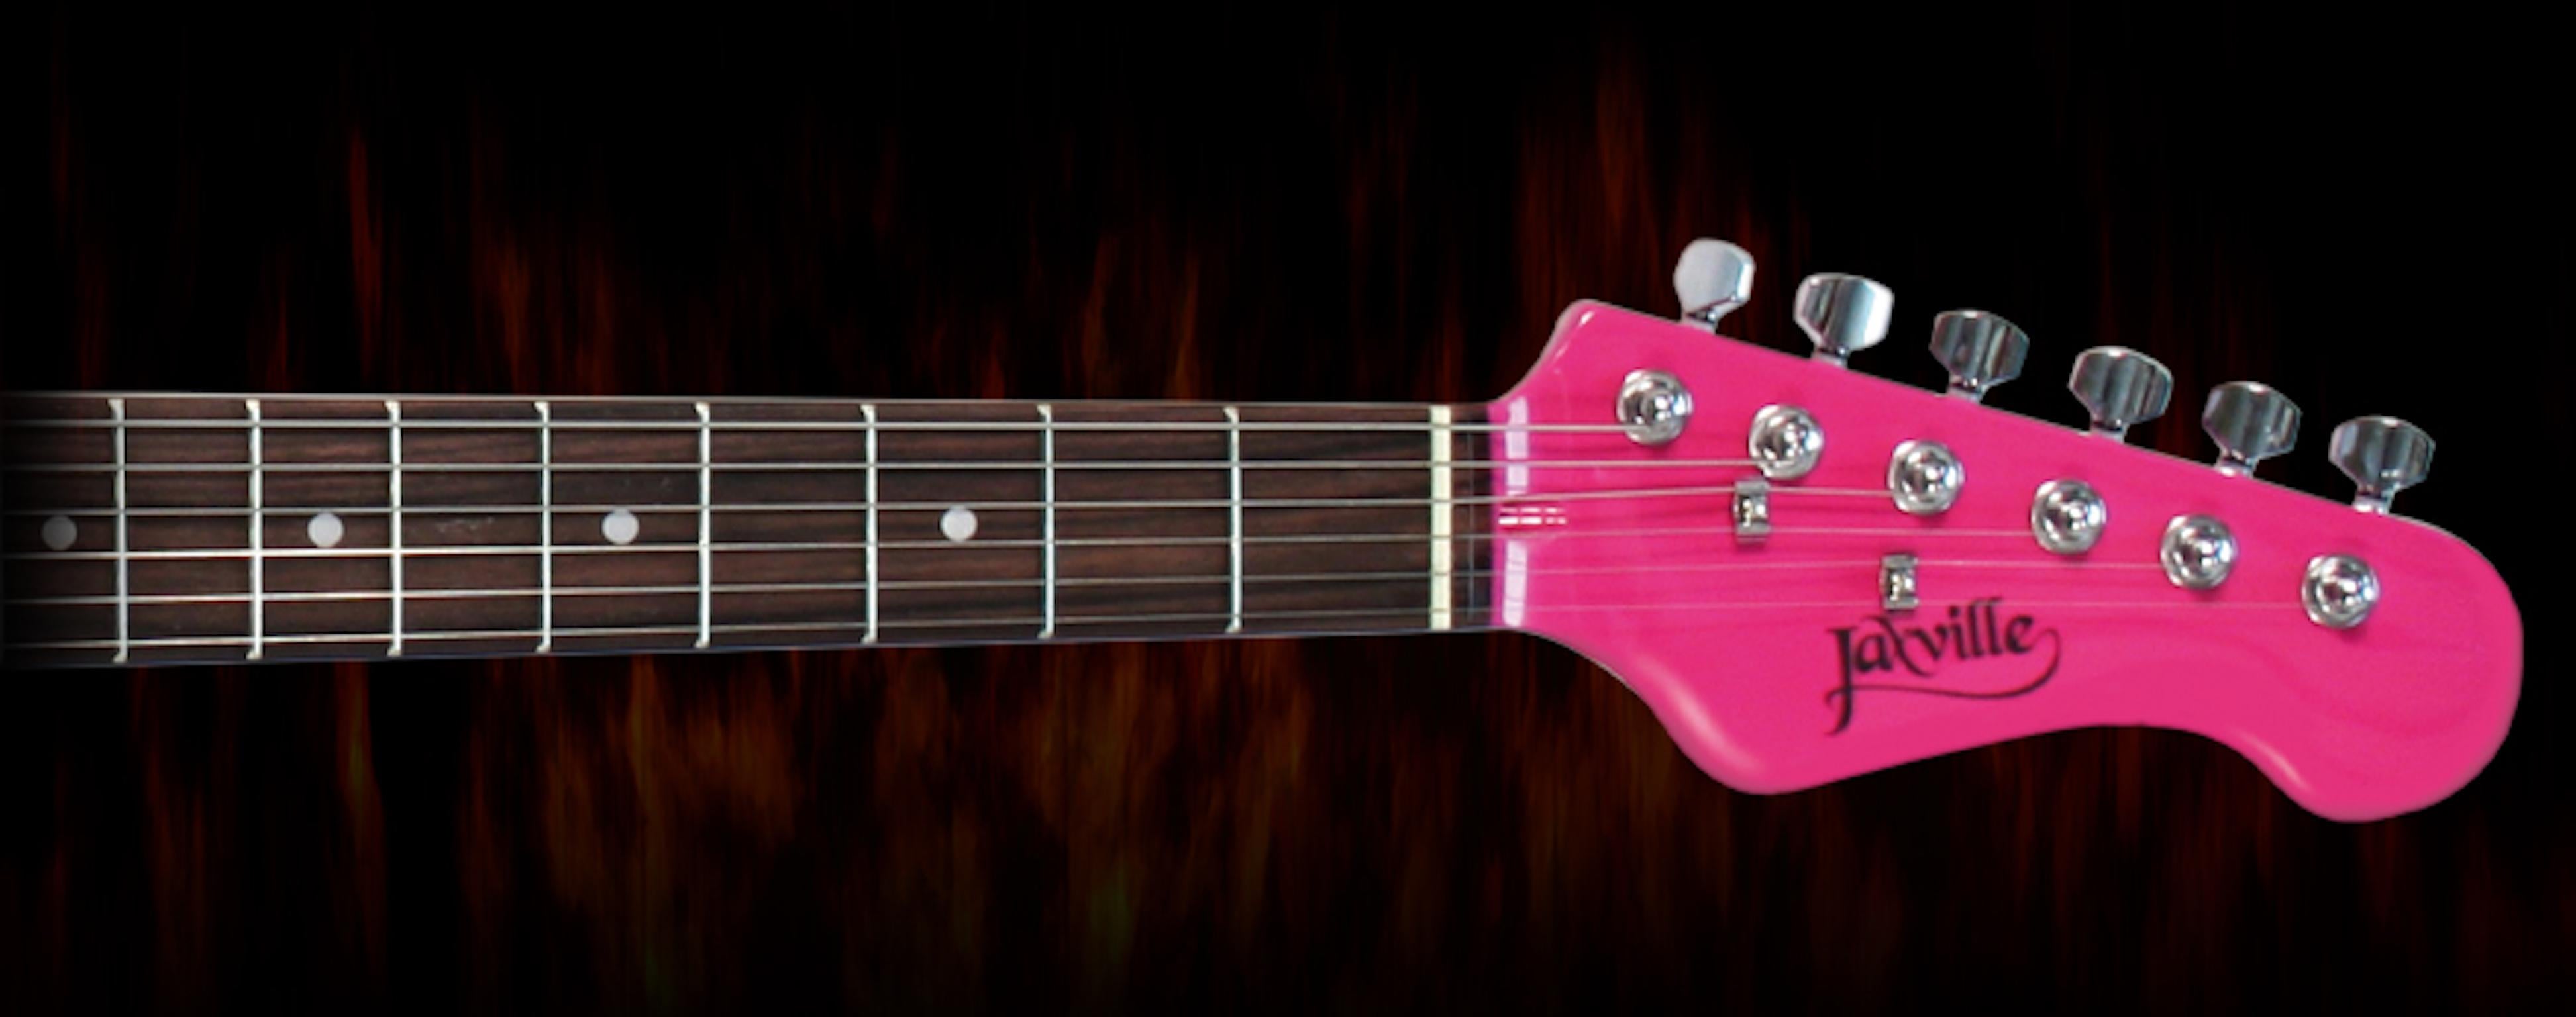 pink rock guitar